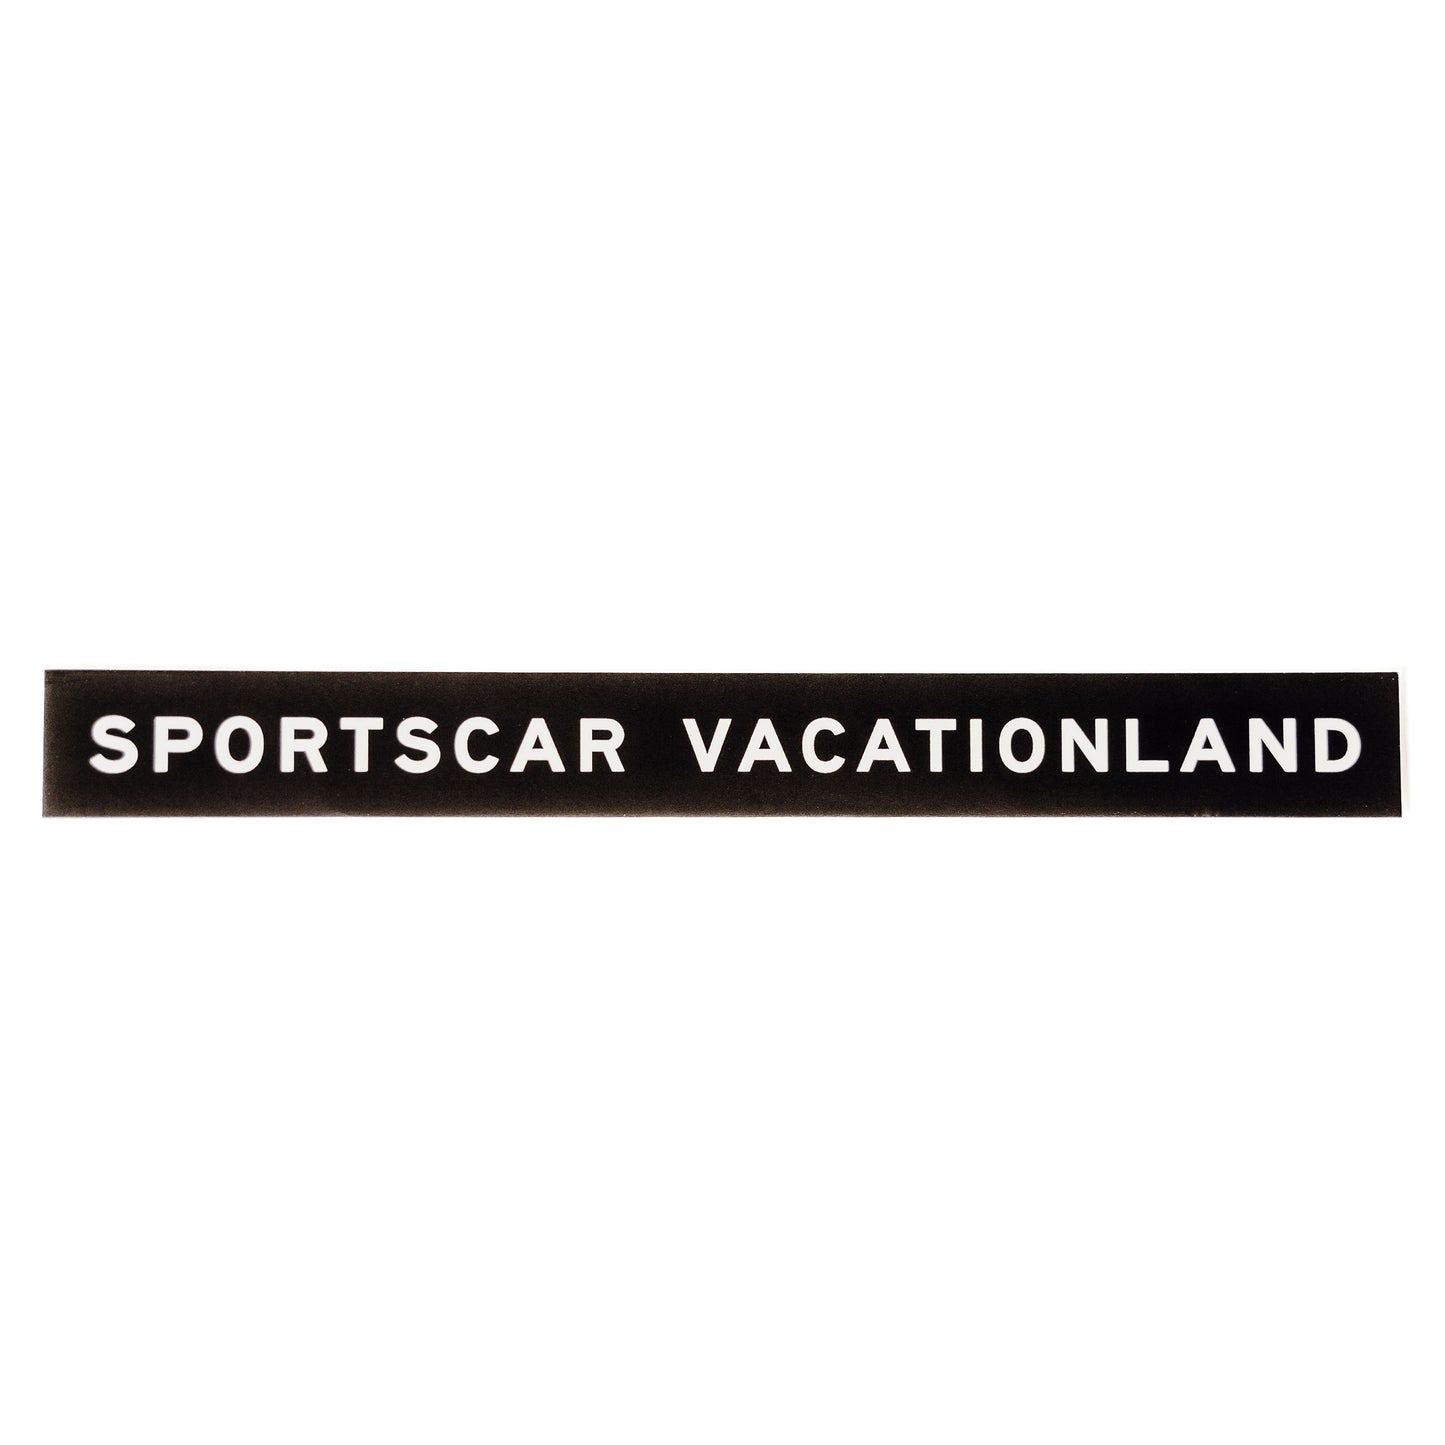 Sportscar Vacationland Decal